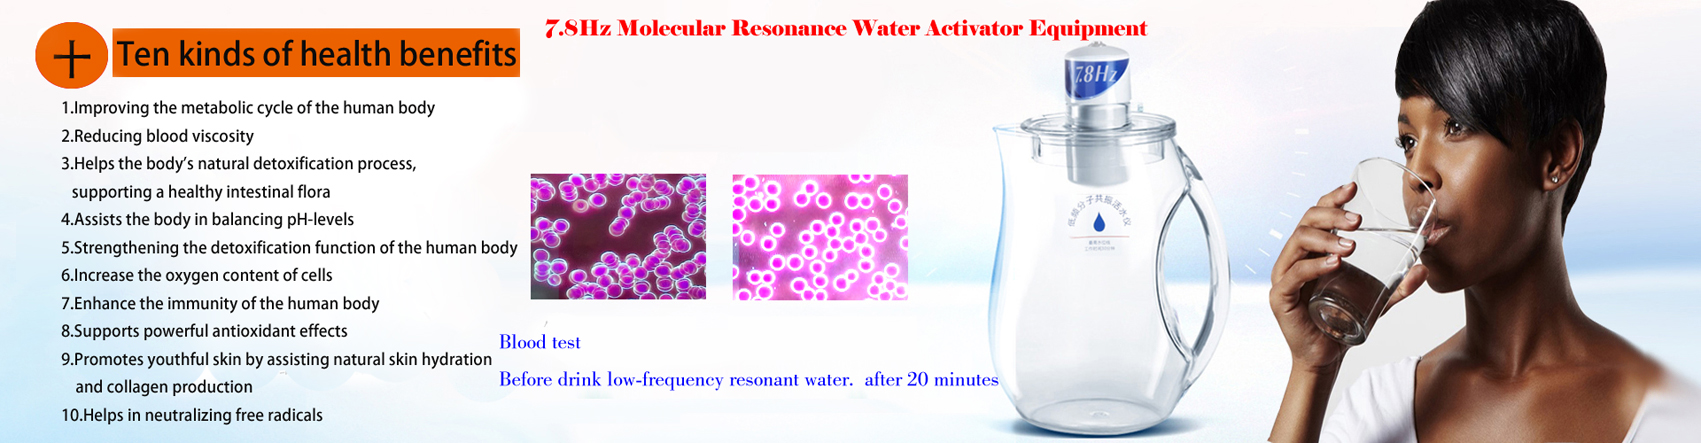 Molecular Resonance Water Activator Equipment